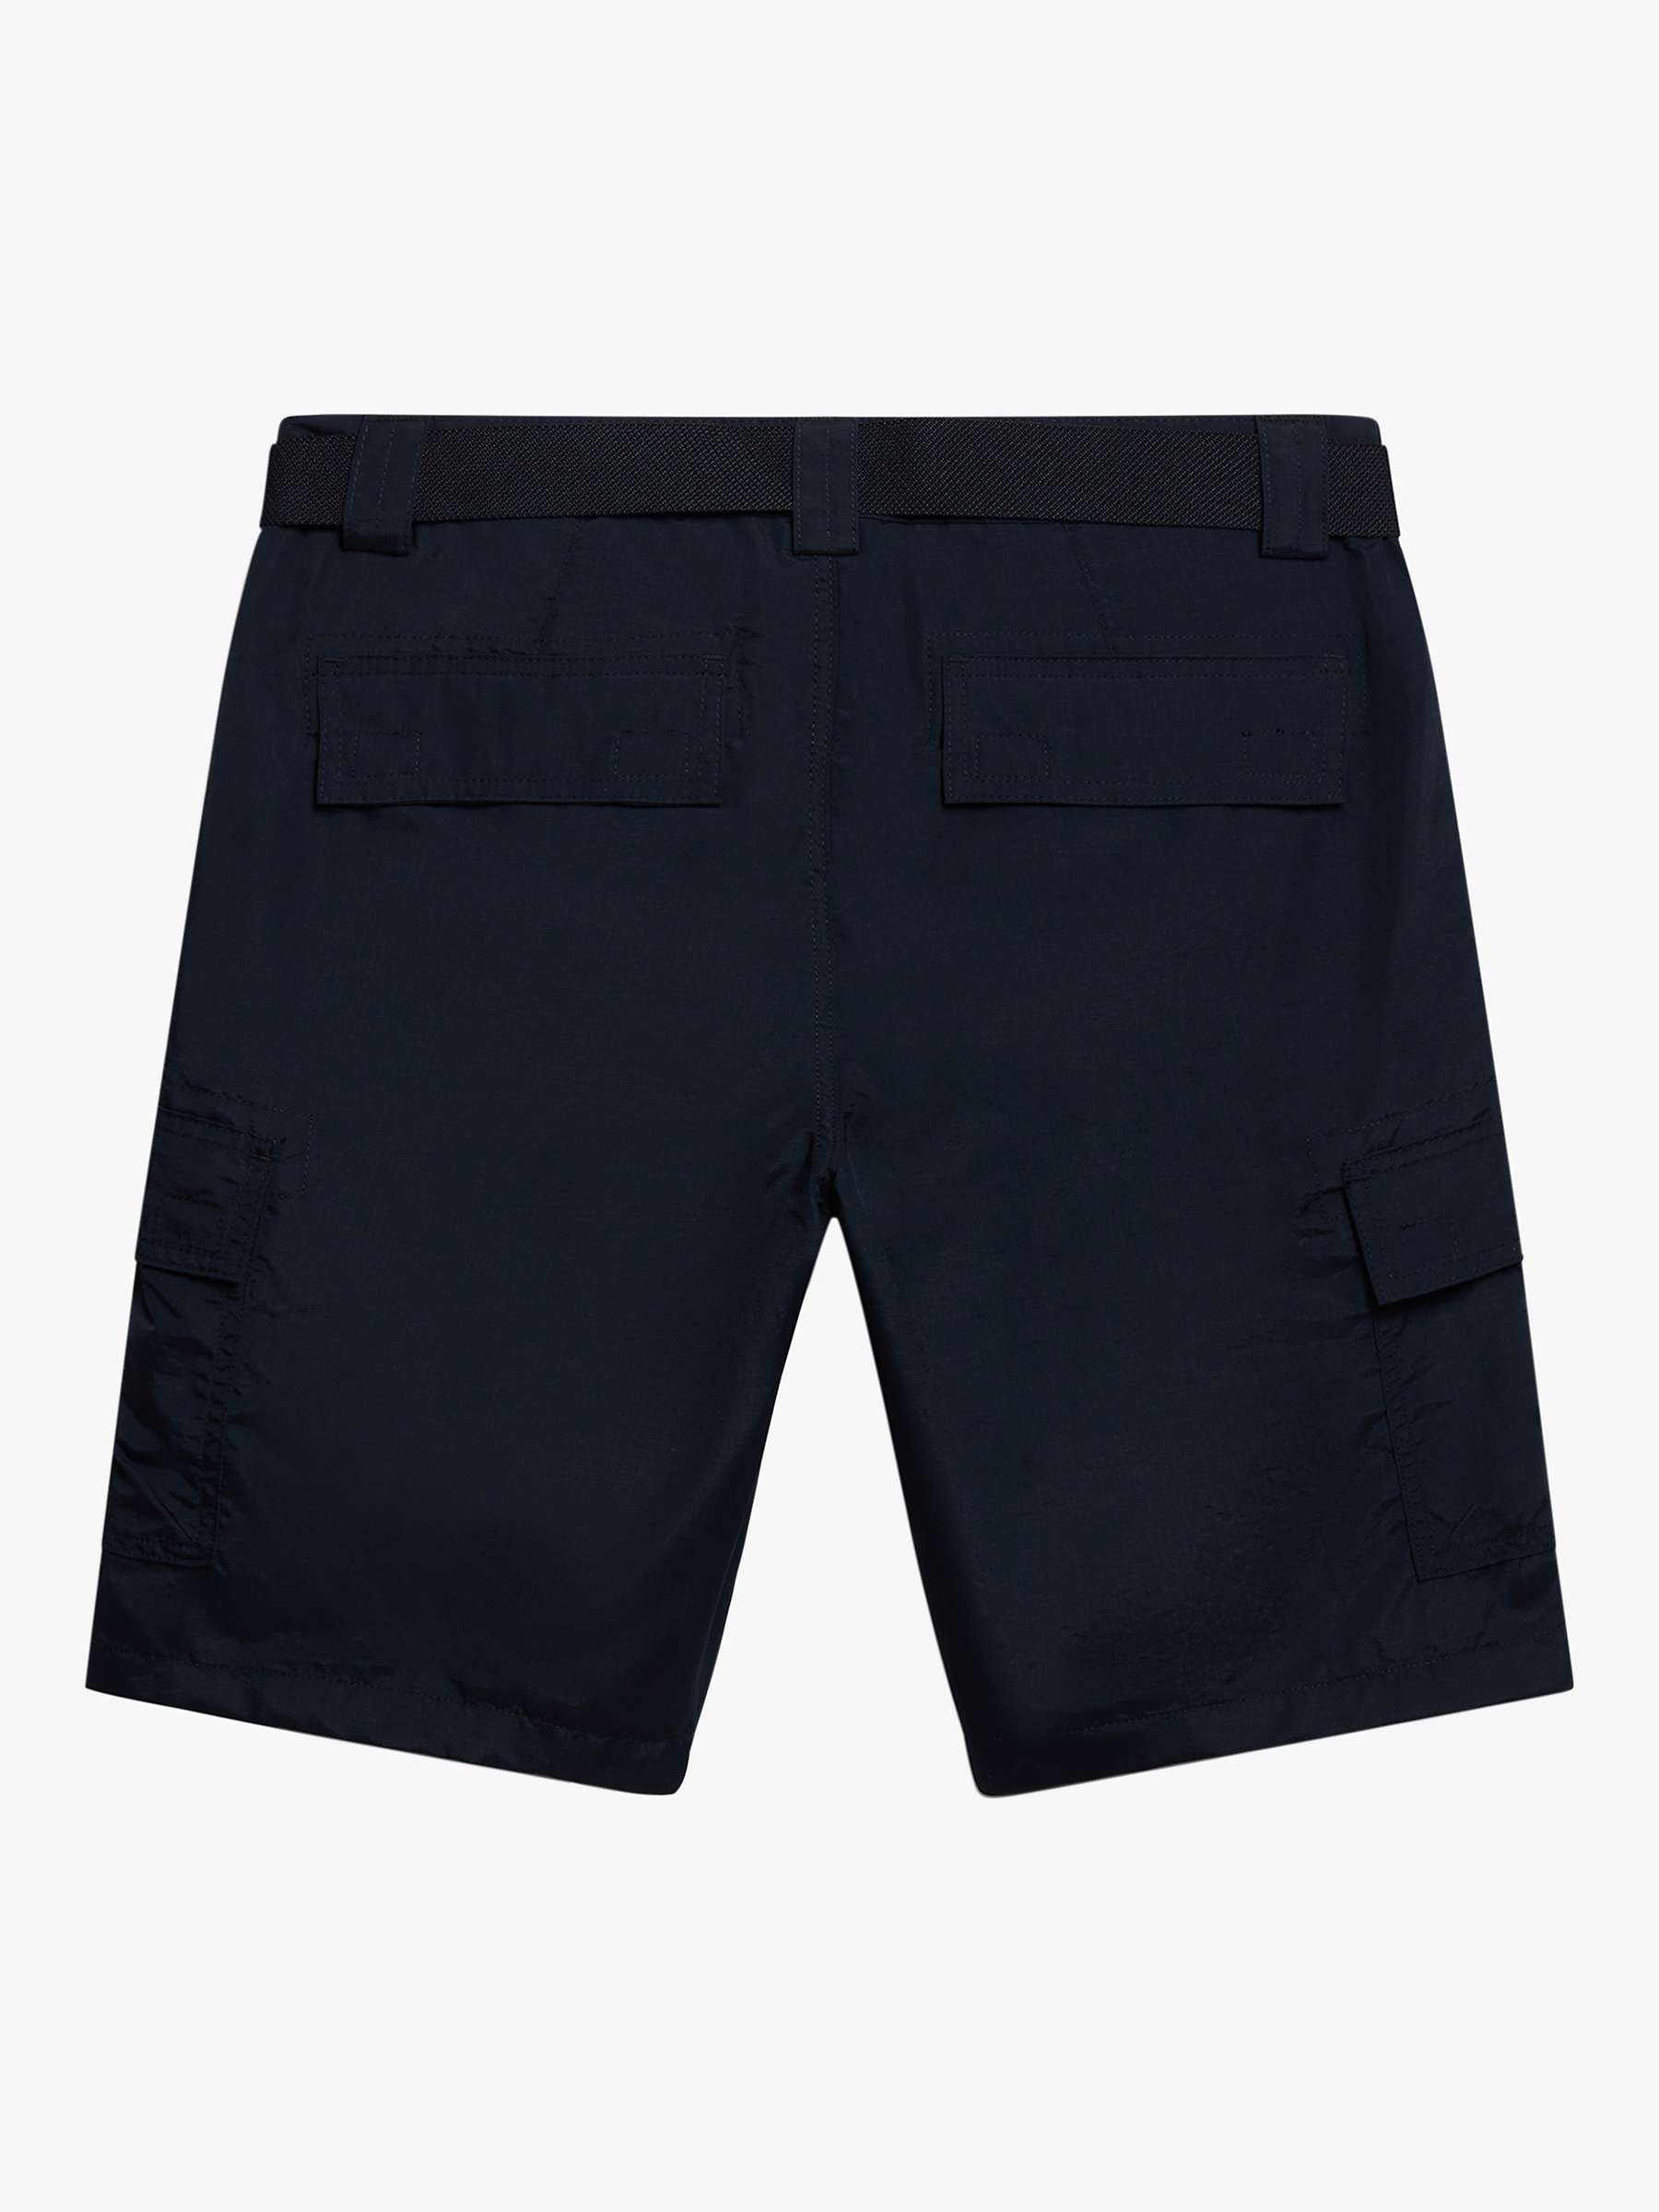 Buy Napapijri Smith Bermuda Cargo Shorts, Black Online at johnlewis.com